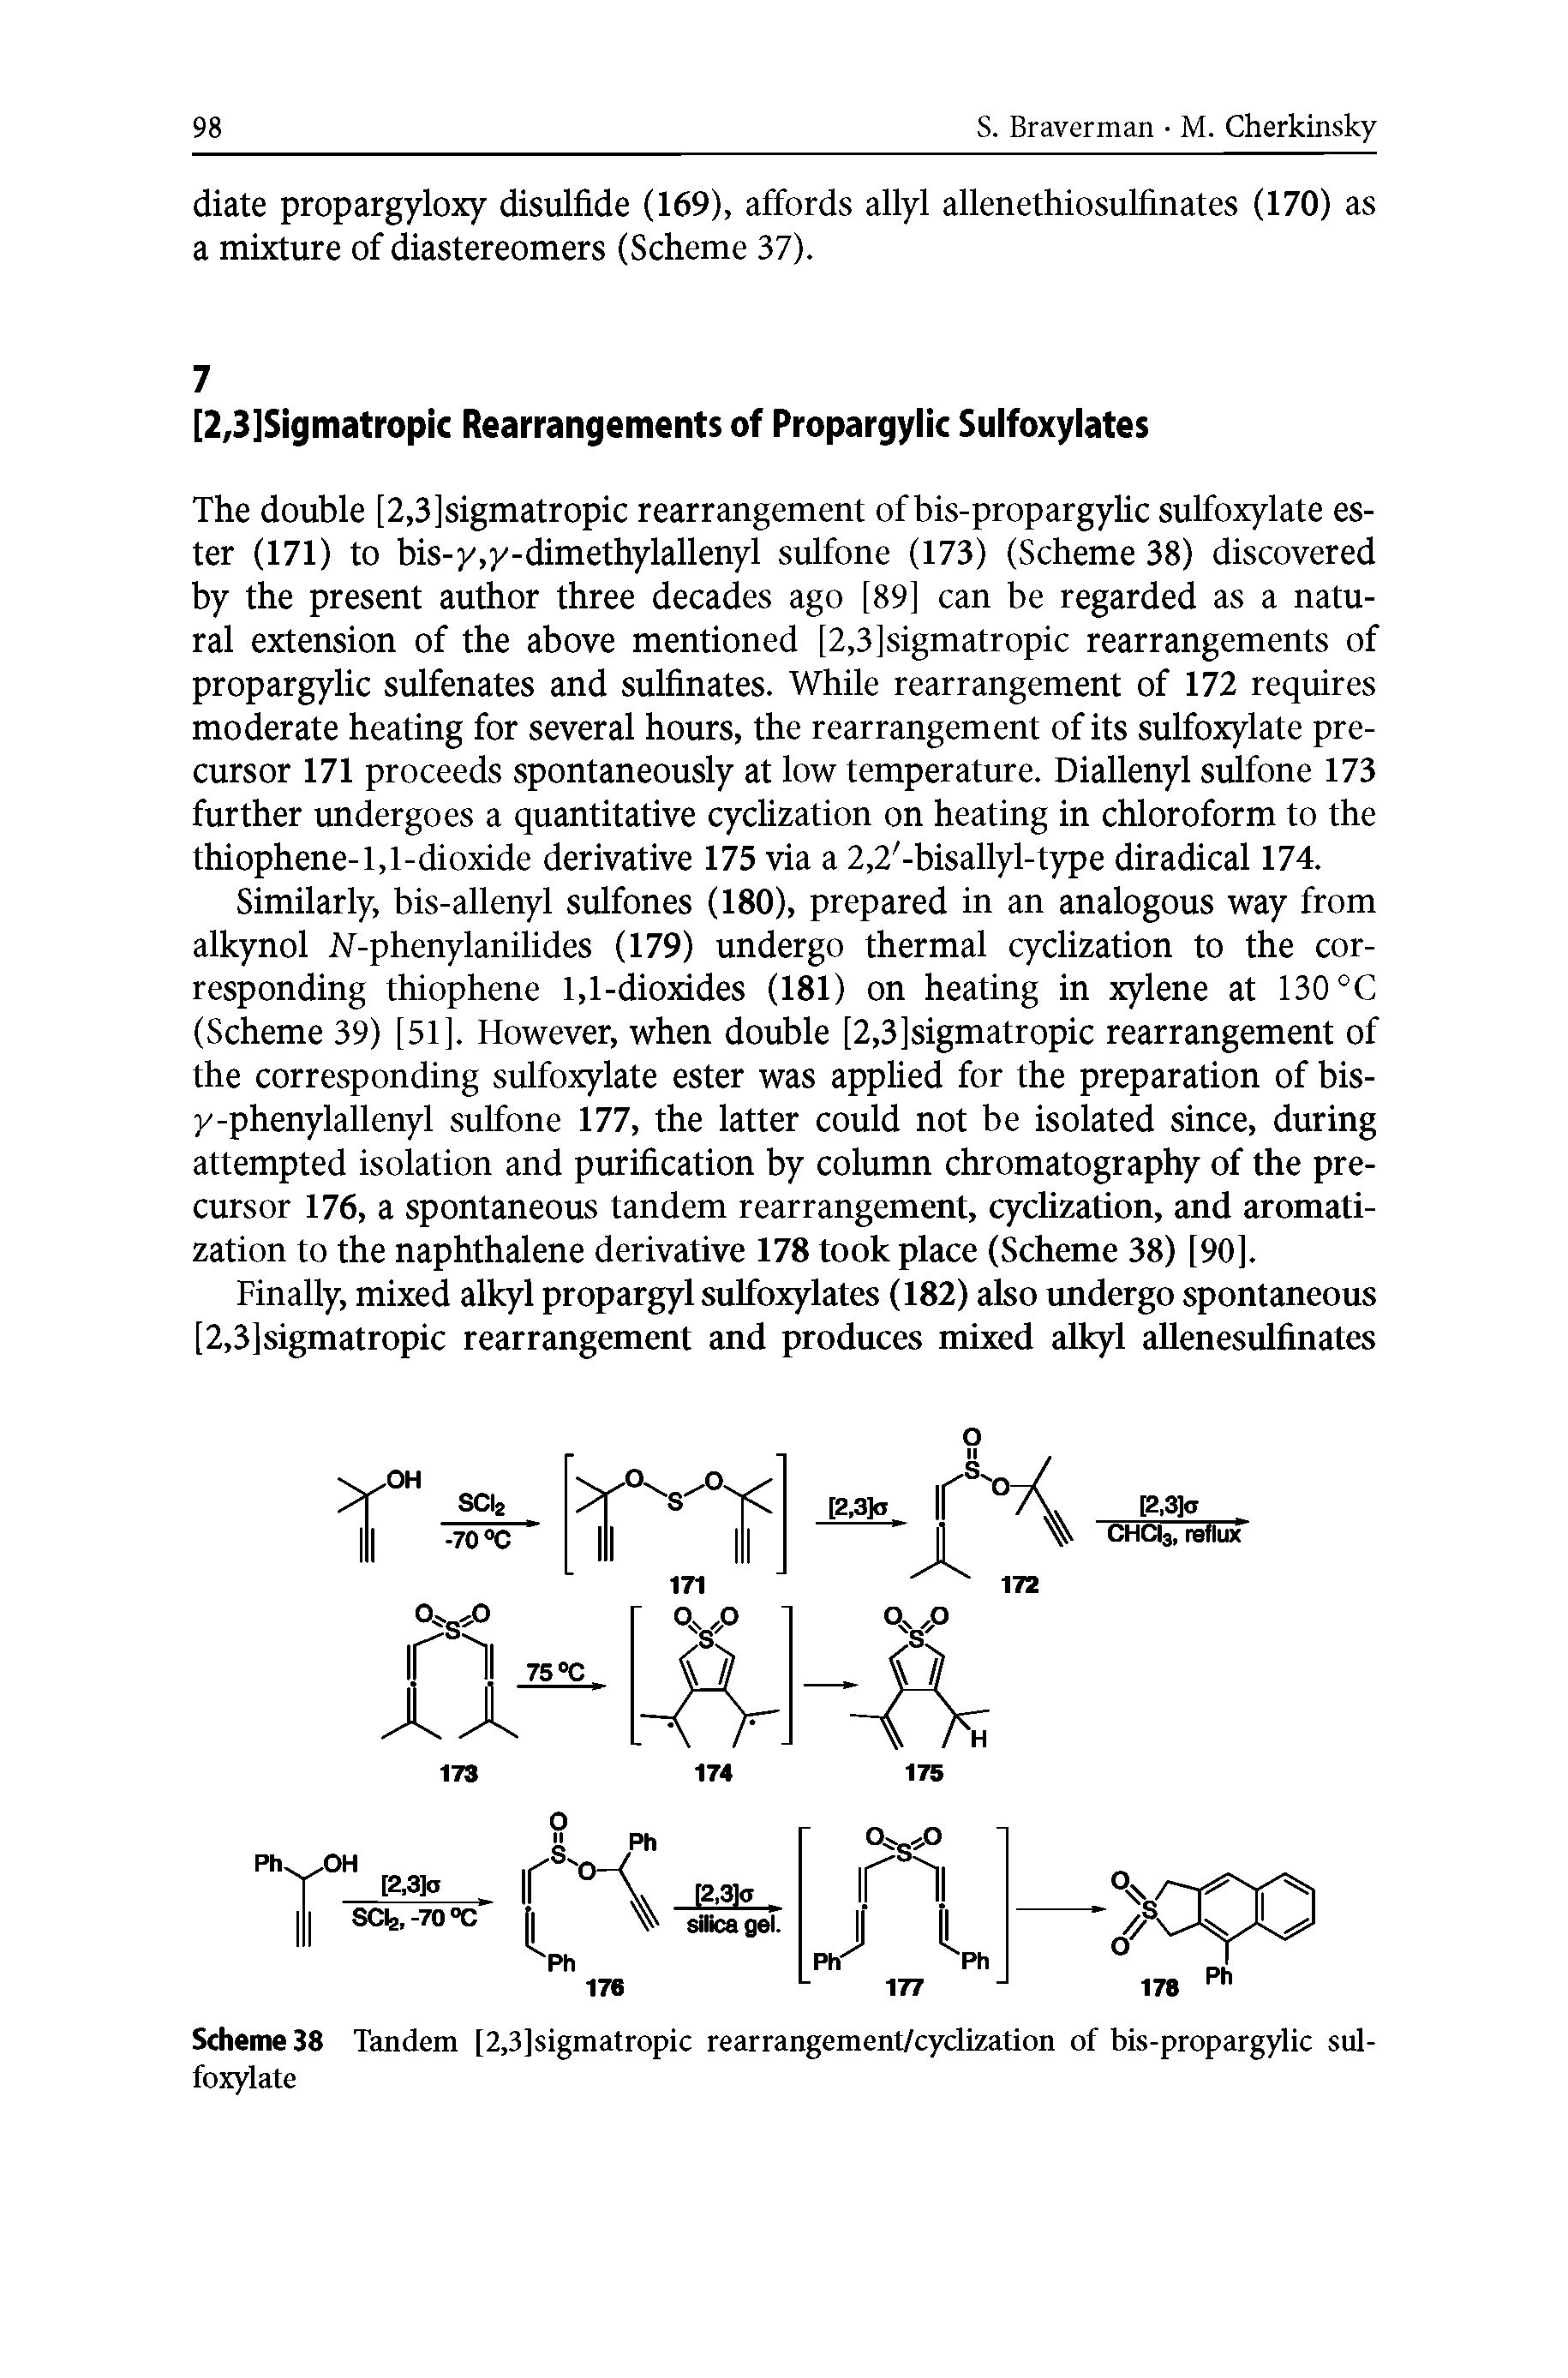 Scheme 38 Tandem [2,3]sigmatropic rearrangement/cyclization of bis-propargylic sulfoxylate...